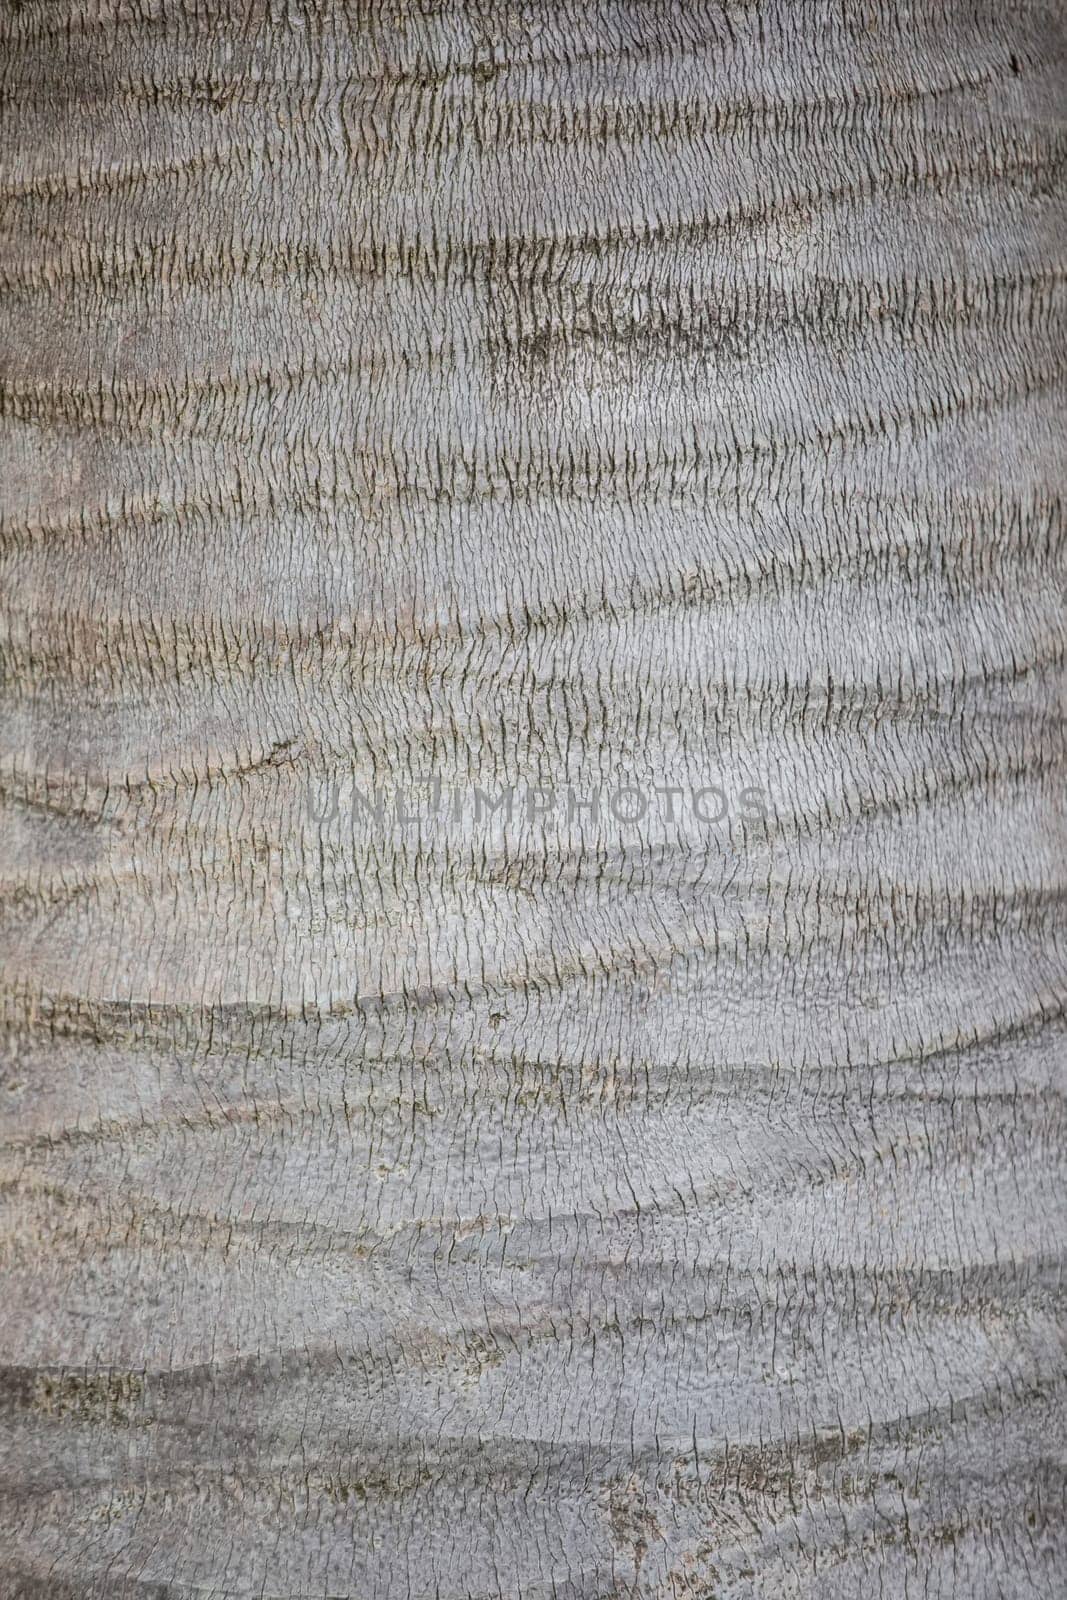 The texture of the bark of a gray coconut tree. Tropical tree bark.